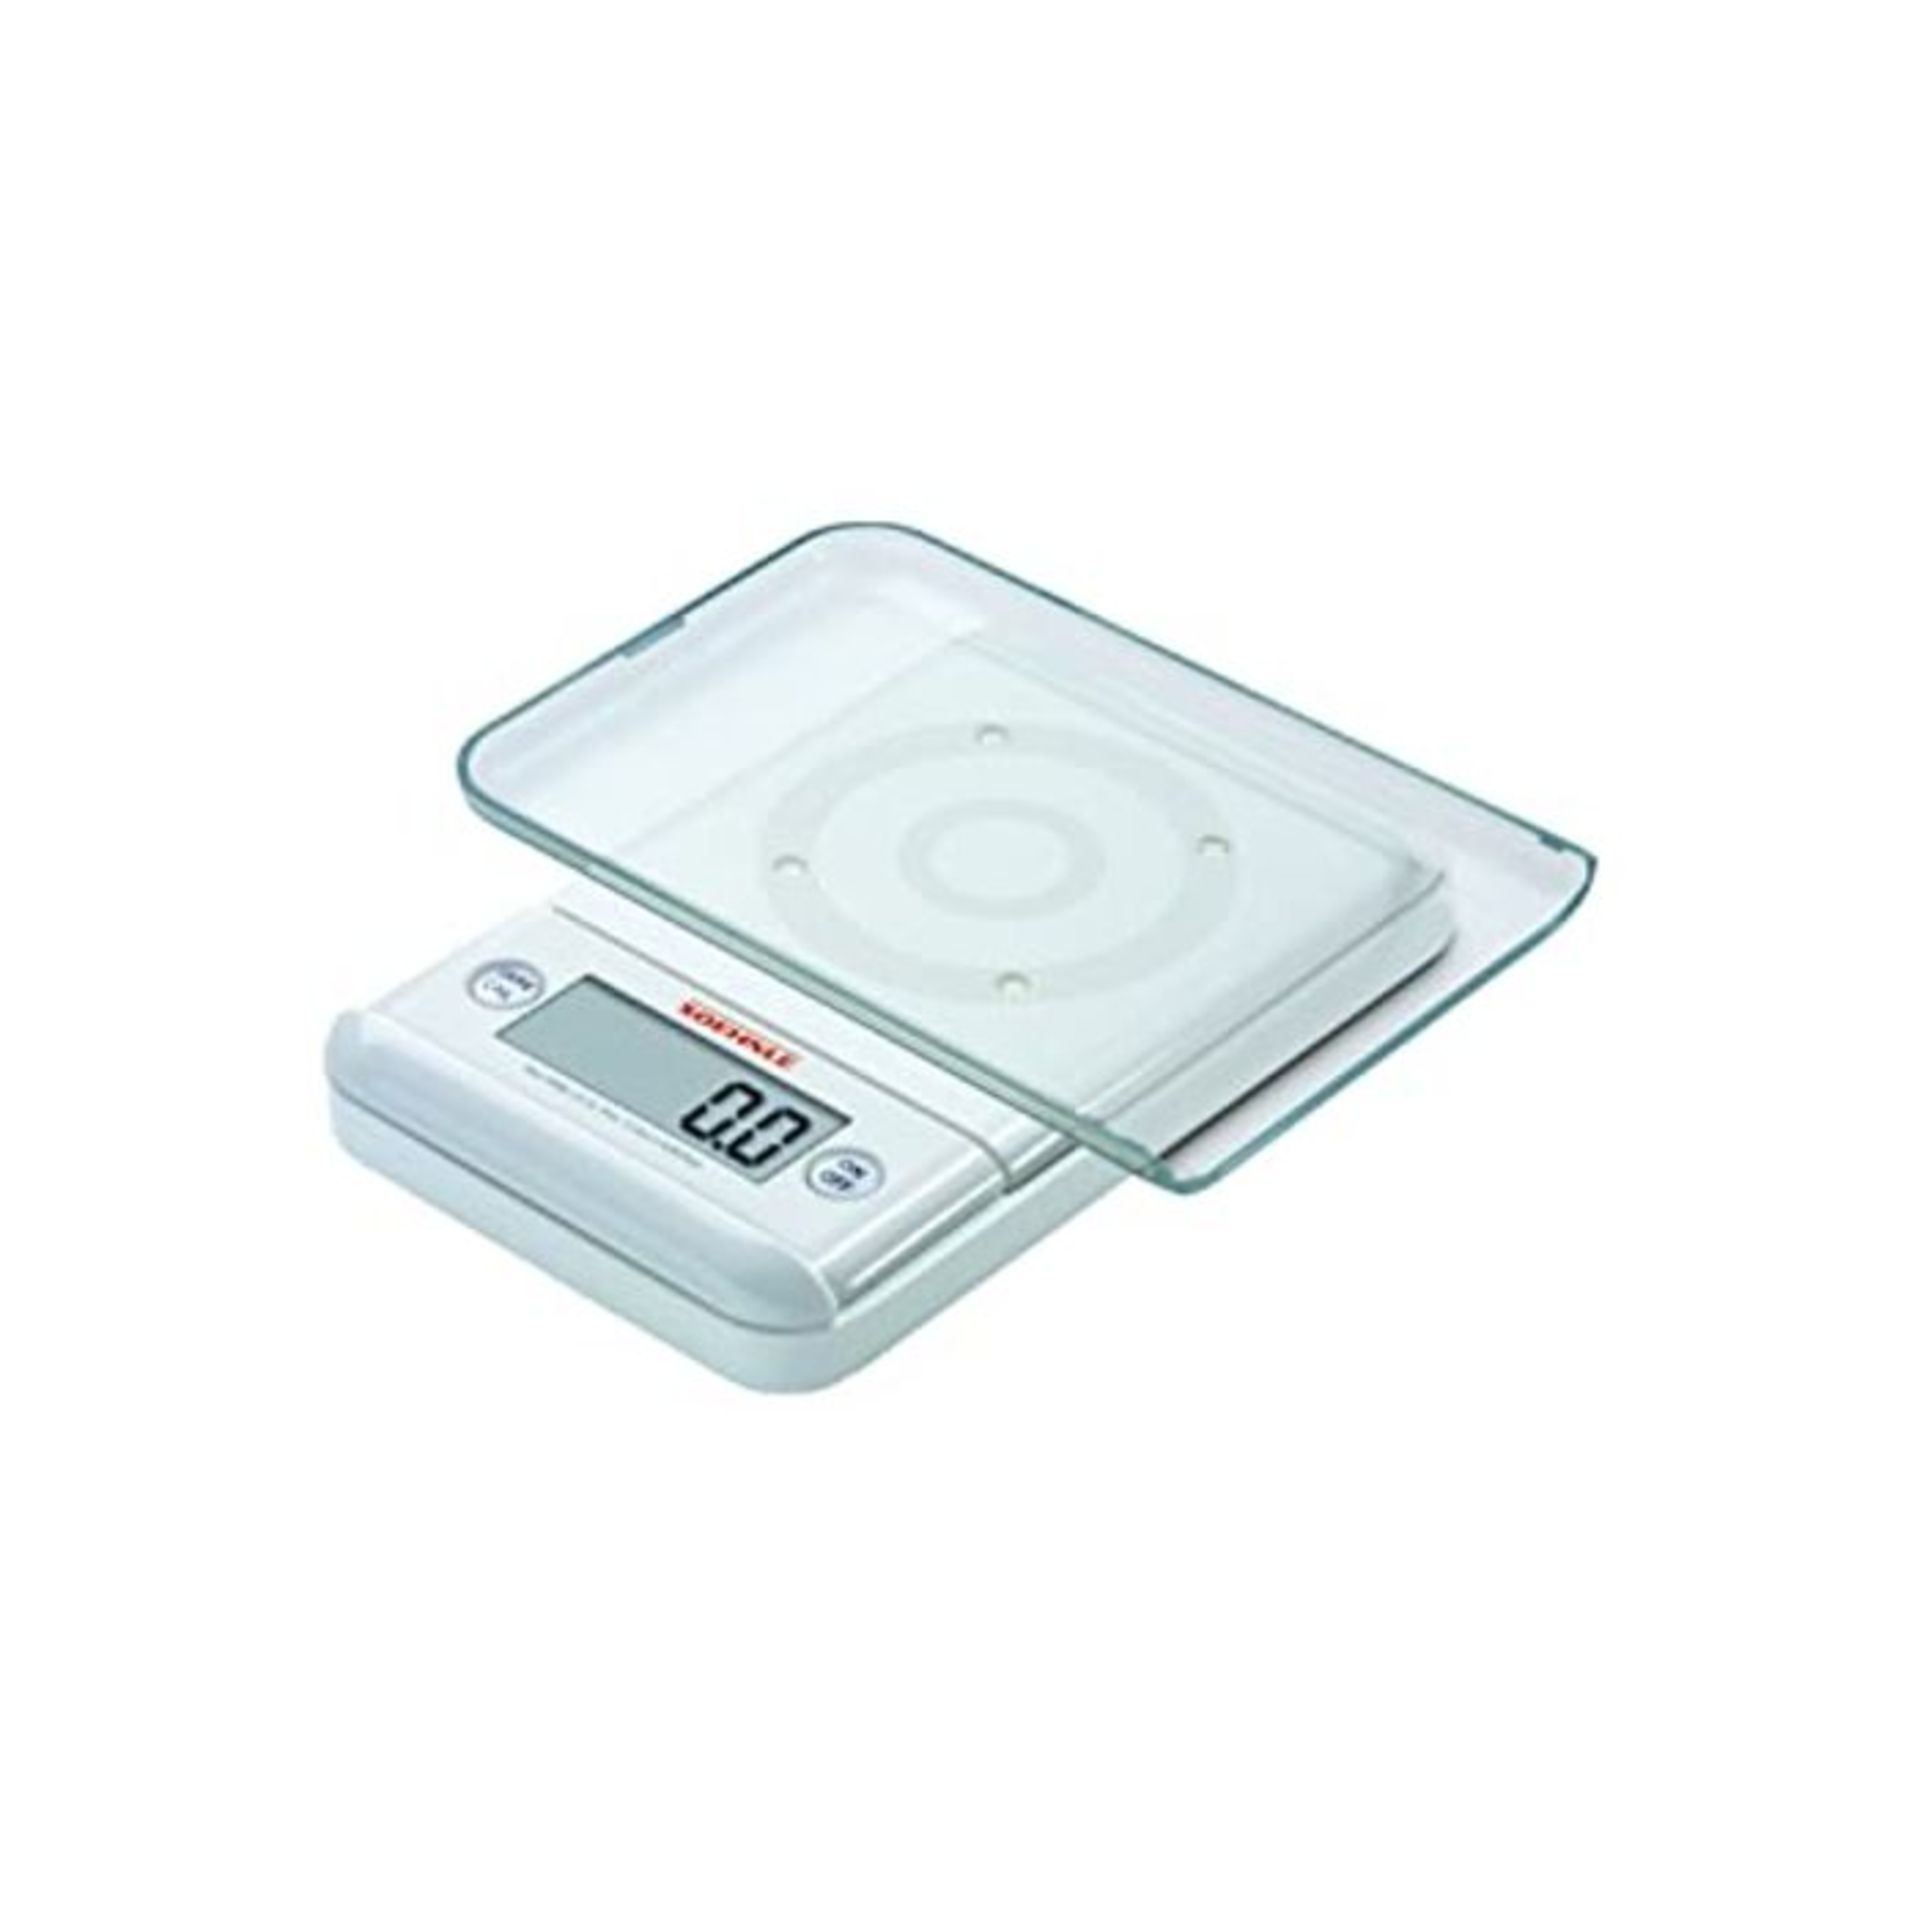 Soehnle Ultra Digital Precision Scale, White, 500 g - Image 4 of 6